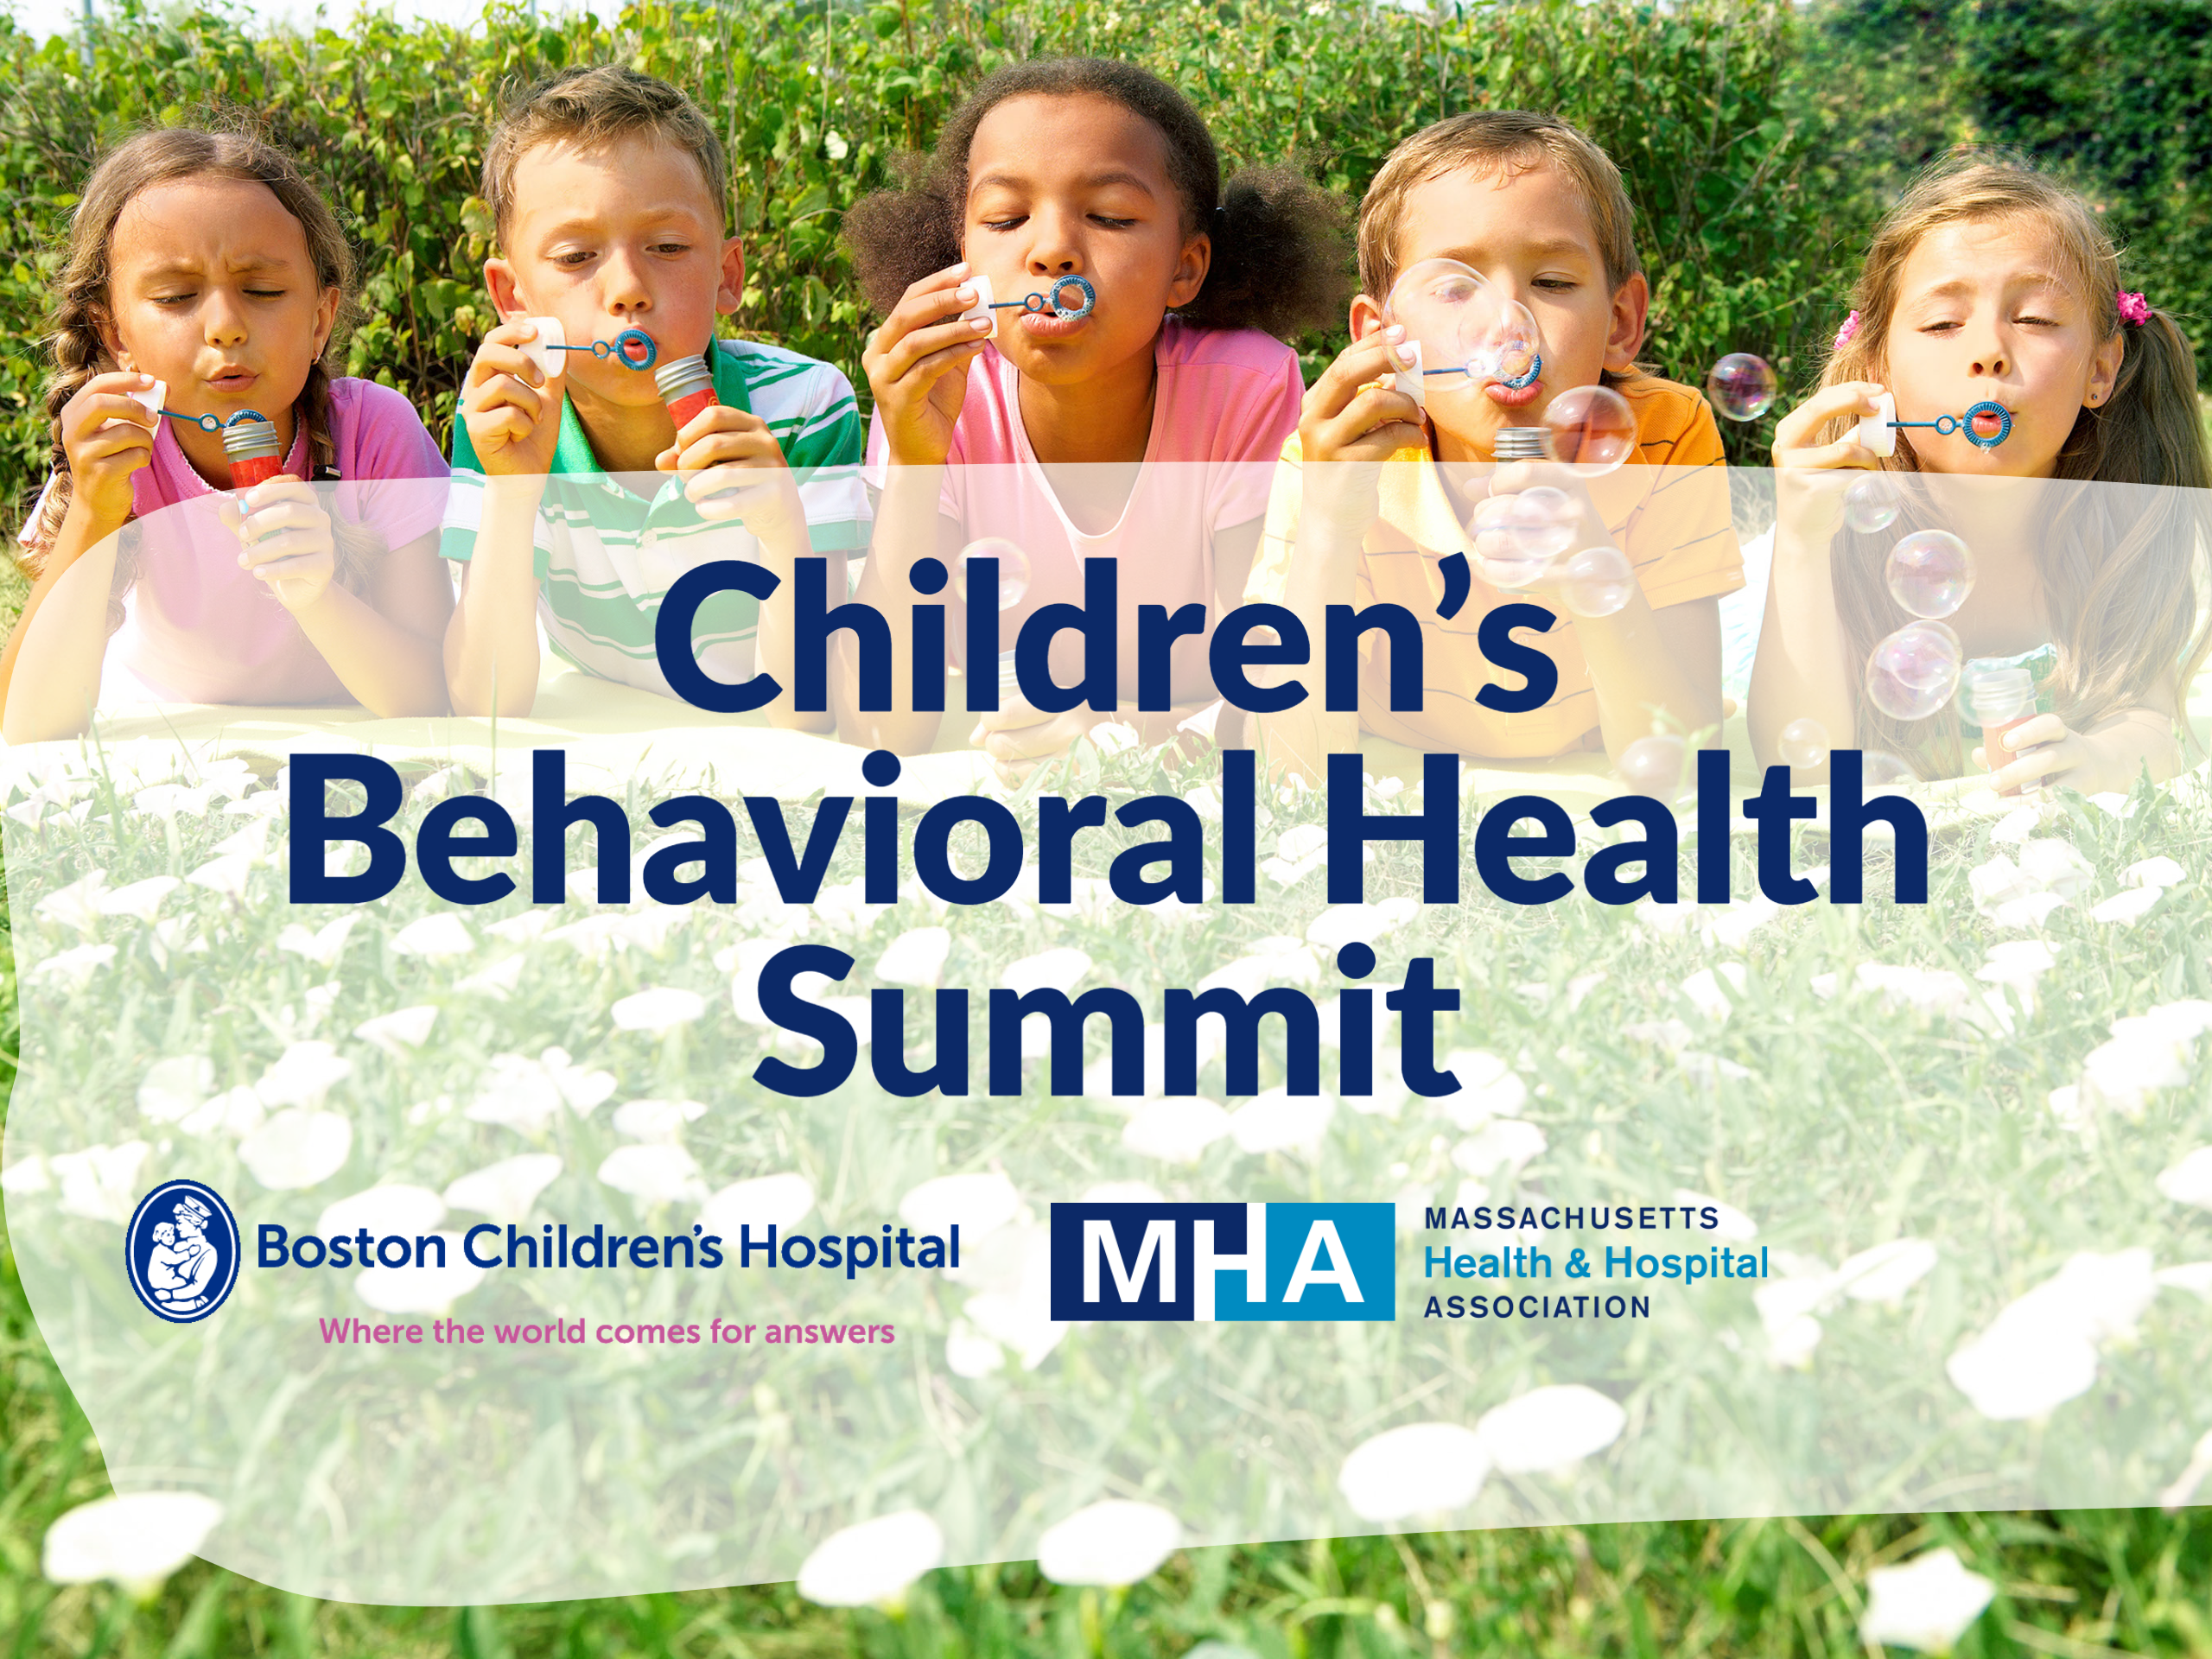 An event image for MHA and Boston Children's Hospital's Children's Behavioral Health Summit